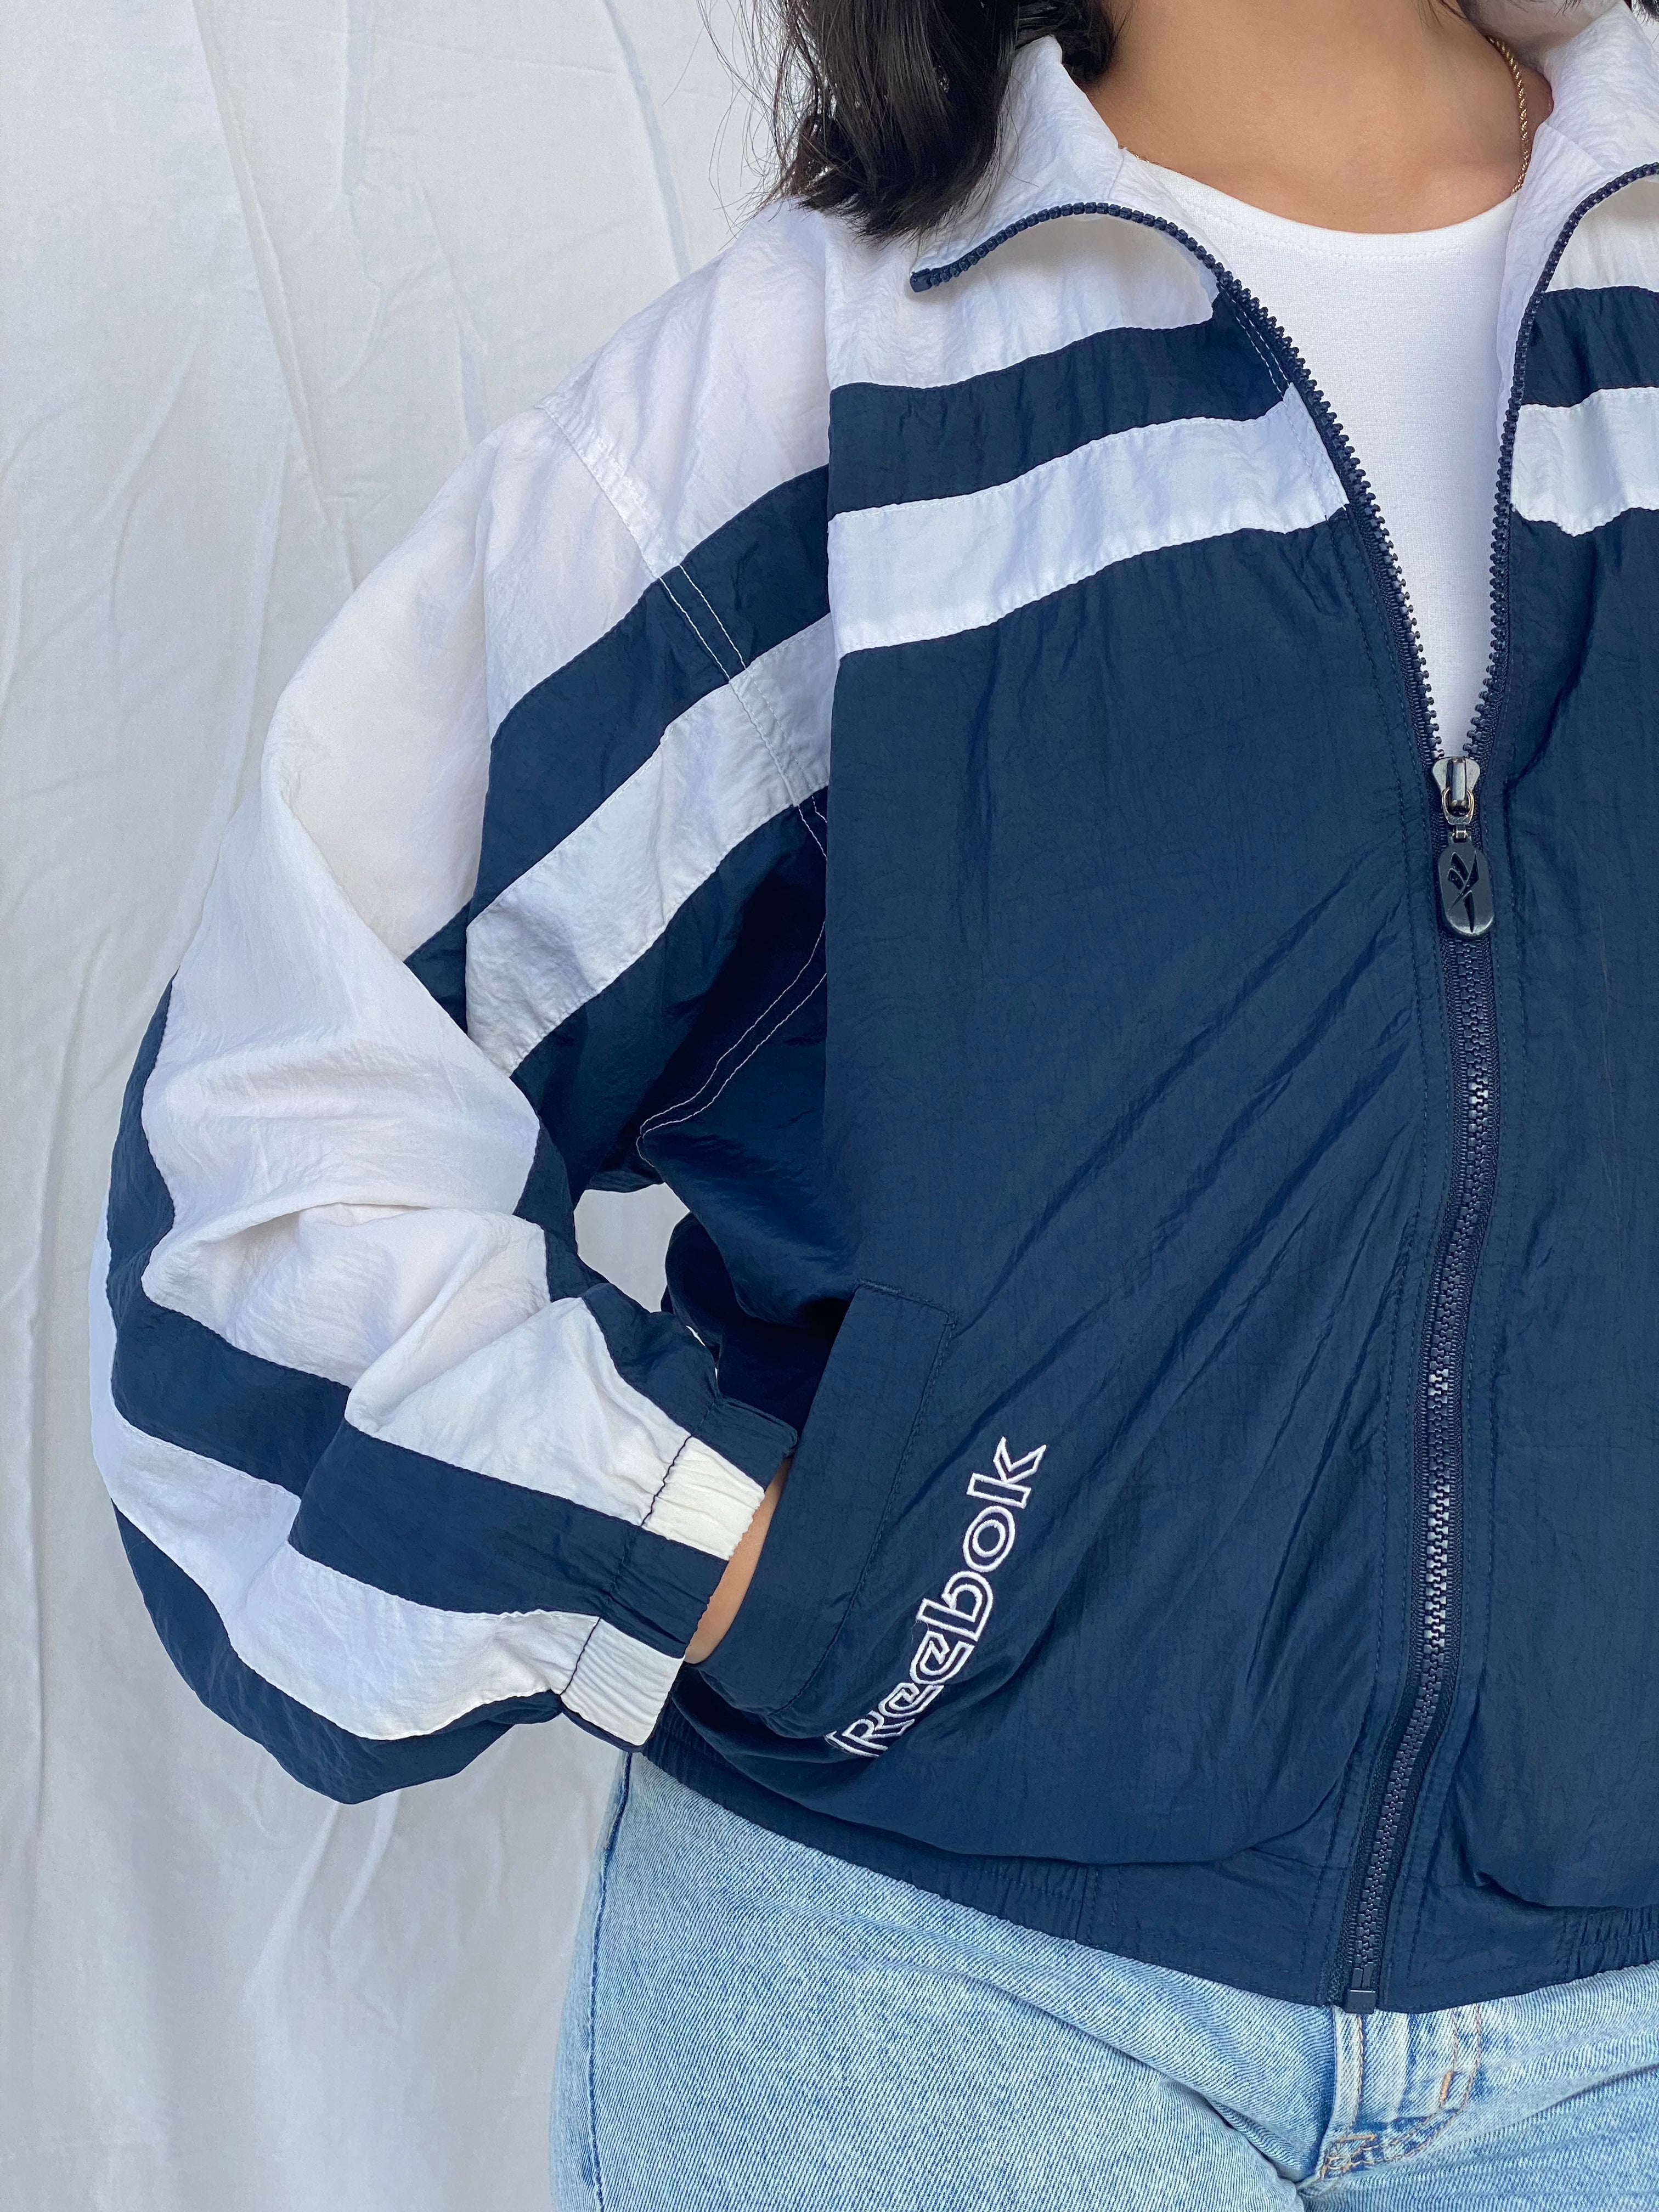 REEBOK Windbreaker Jacket - Balagan Vintage Windbreaker Jacket 90s, nylon, outerwear, Reebok, vintage, windbreaker, windbreaker jacket